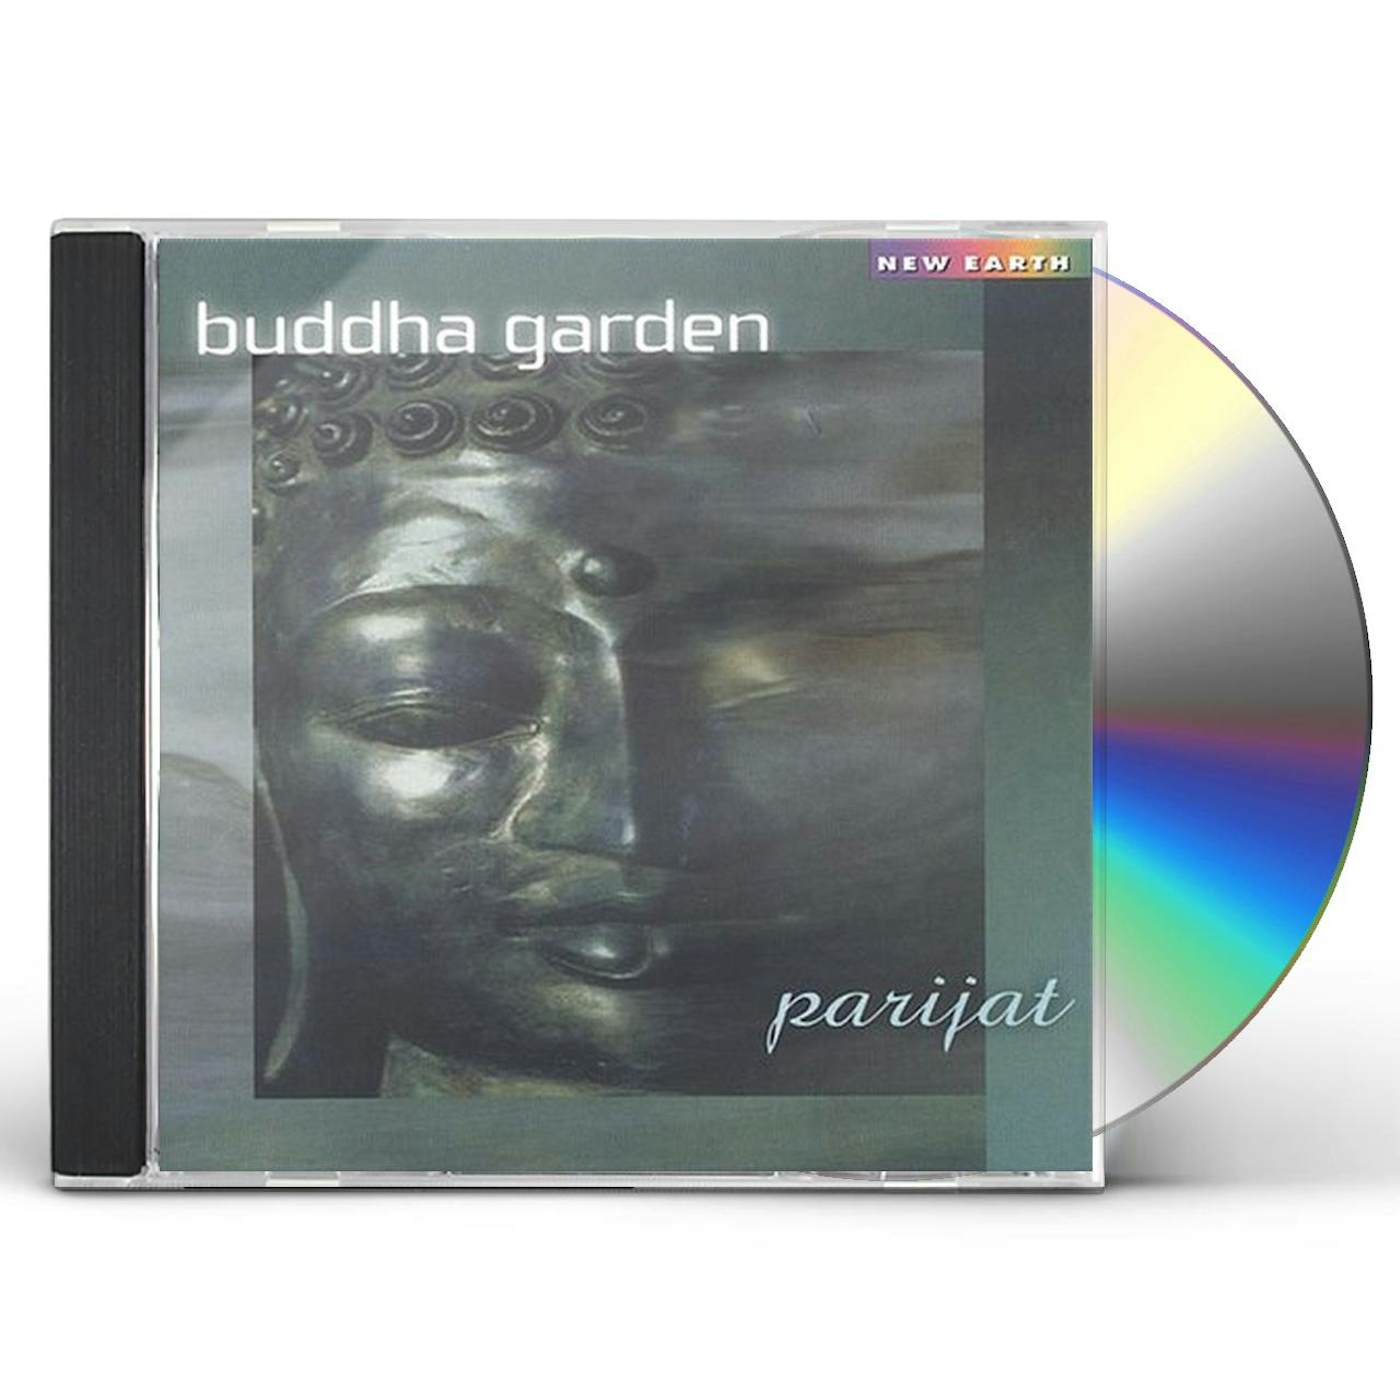 Parijat BUDDHA GARDEN CD